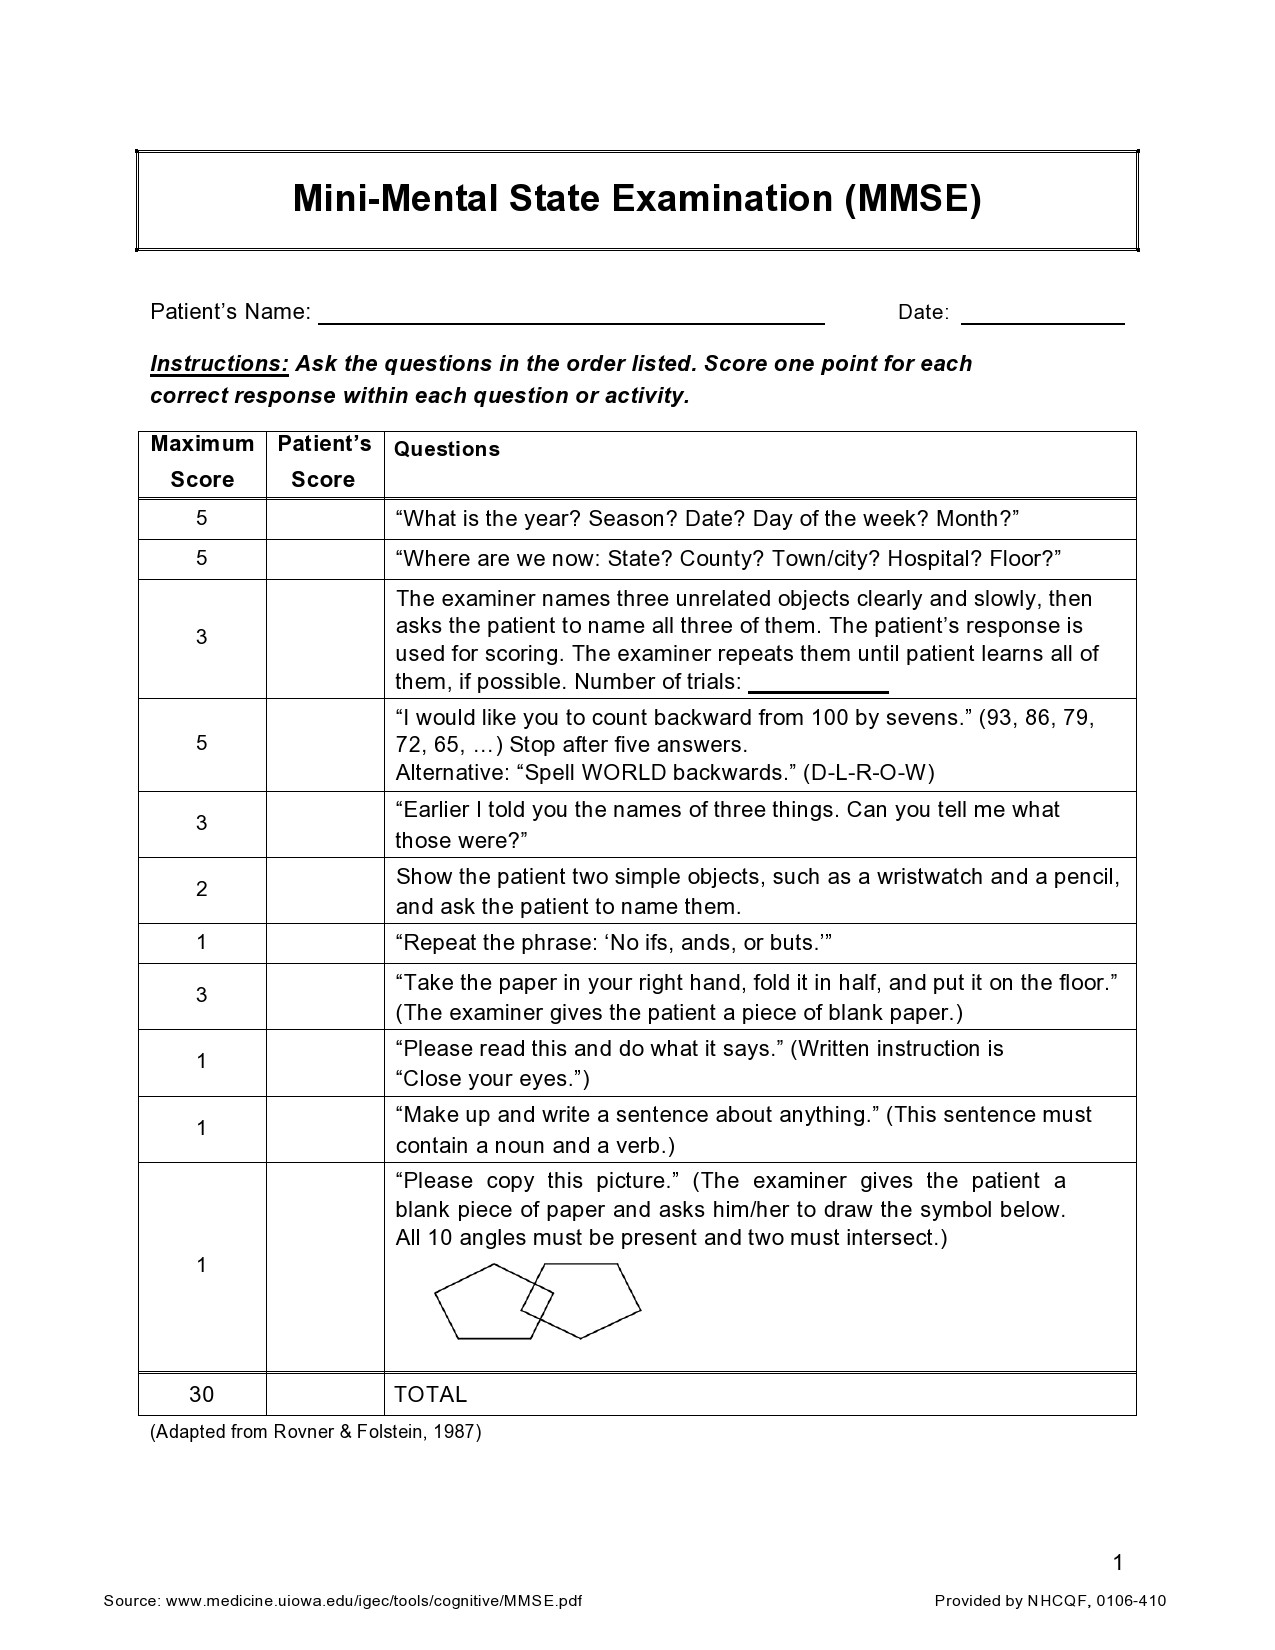 Folstein S Mini Mental Status Exam Mmse Questionnaire - vrogue.co